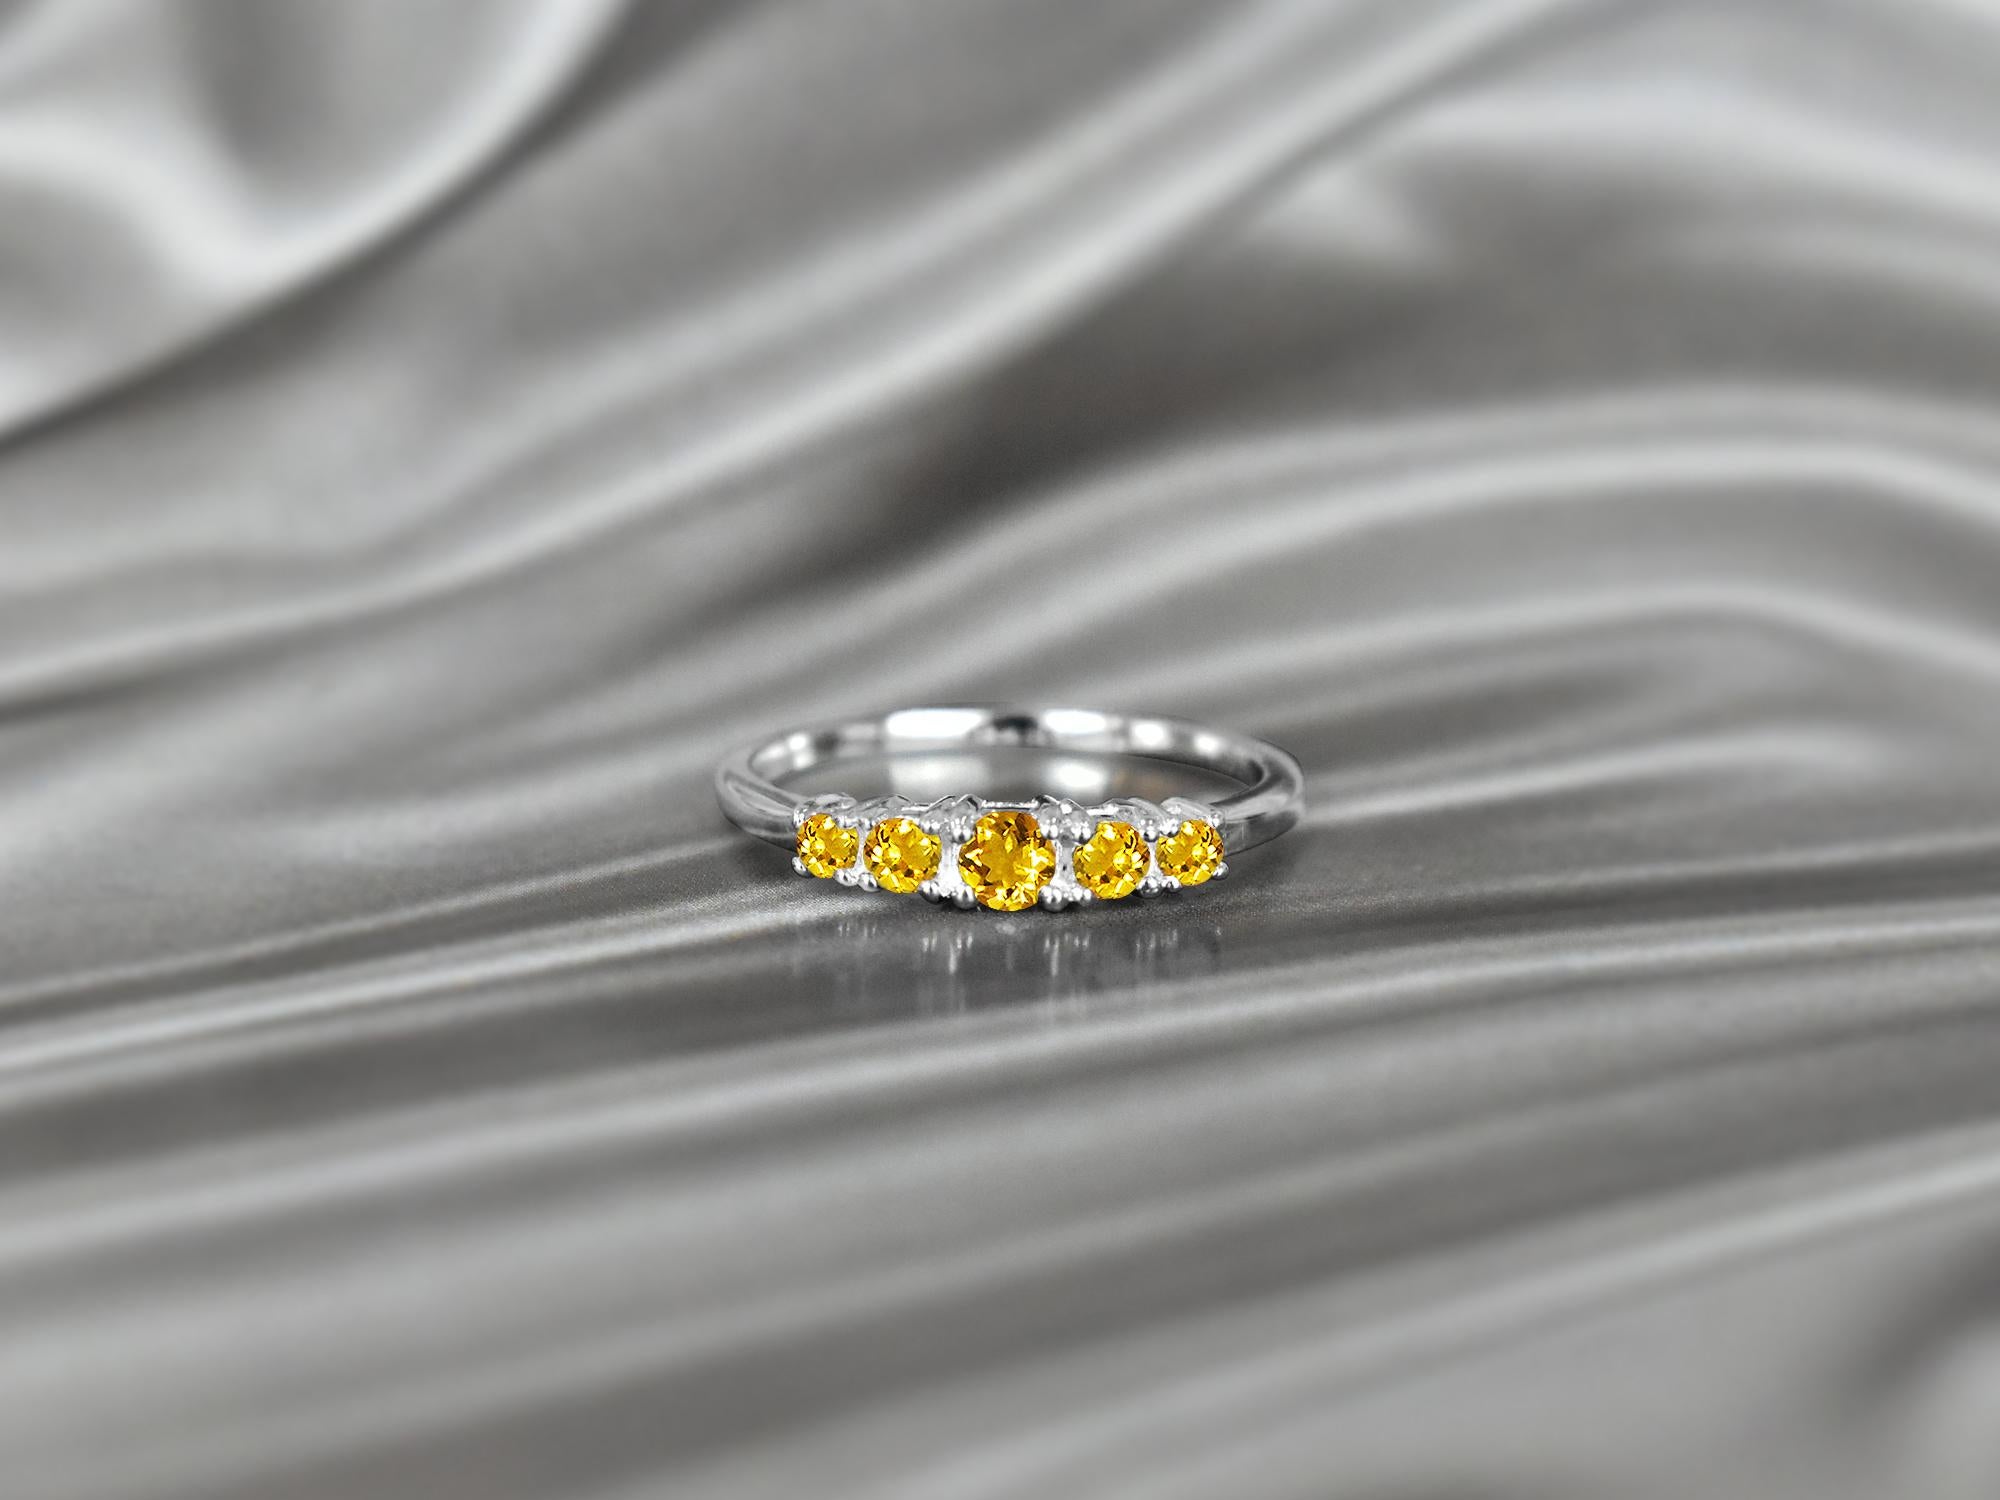 For Sale:  10k Gold Multiple Gemstone Ring Birthstone Ring 7